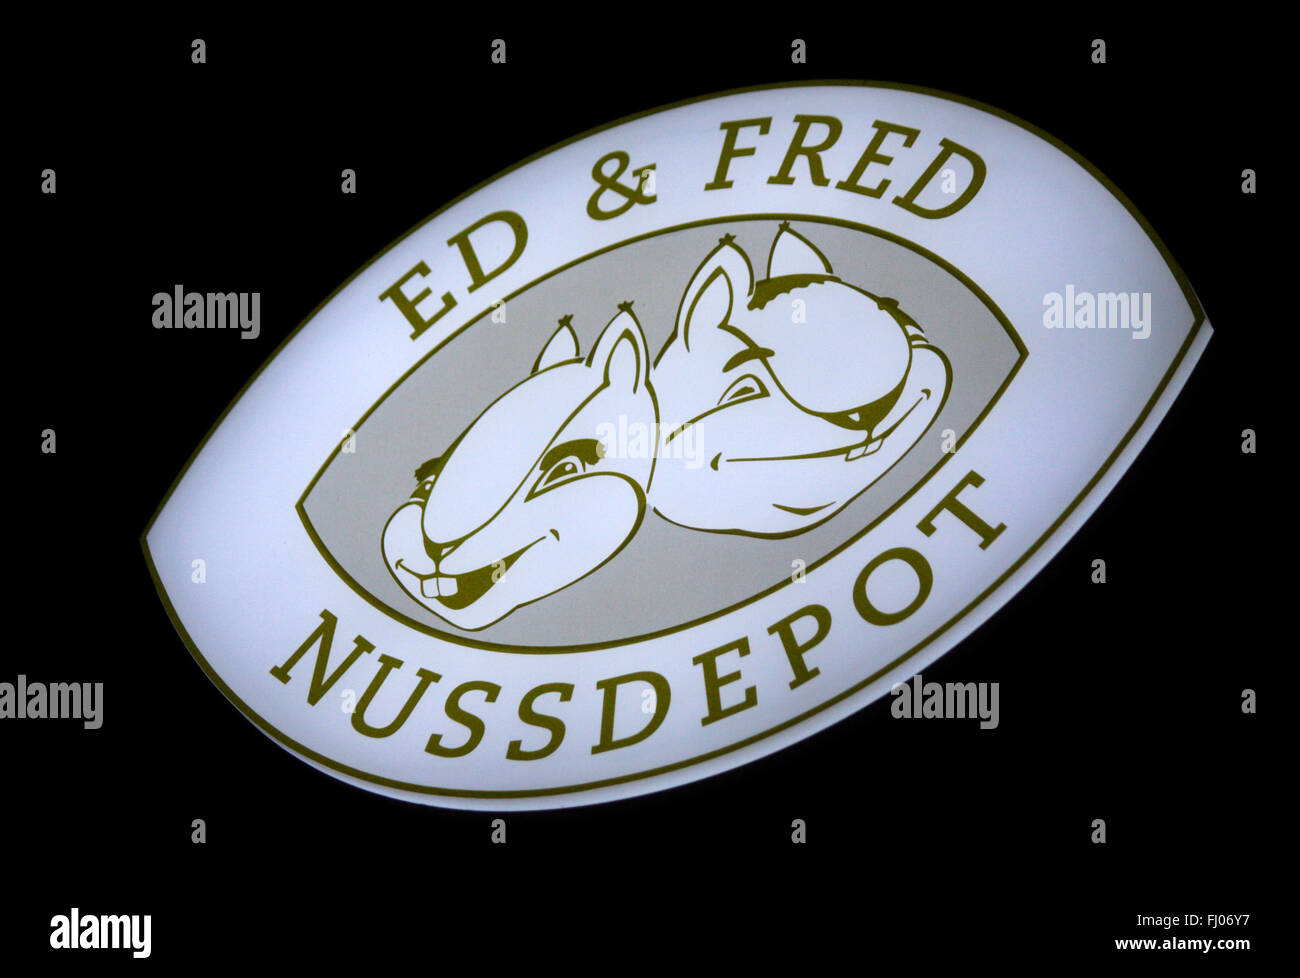 Markenname: 'Ed & Fred Nussdepot', Berlin. Stock Photo